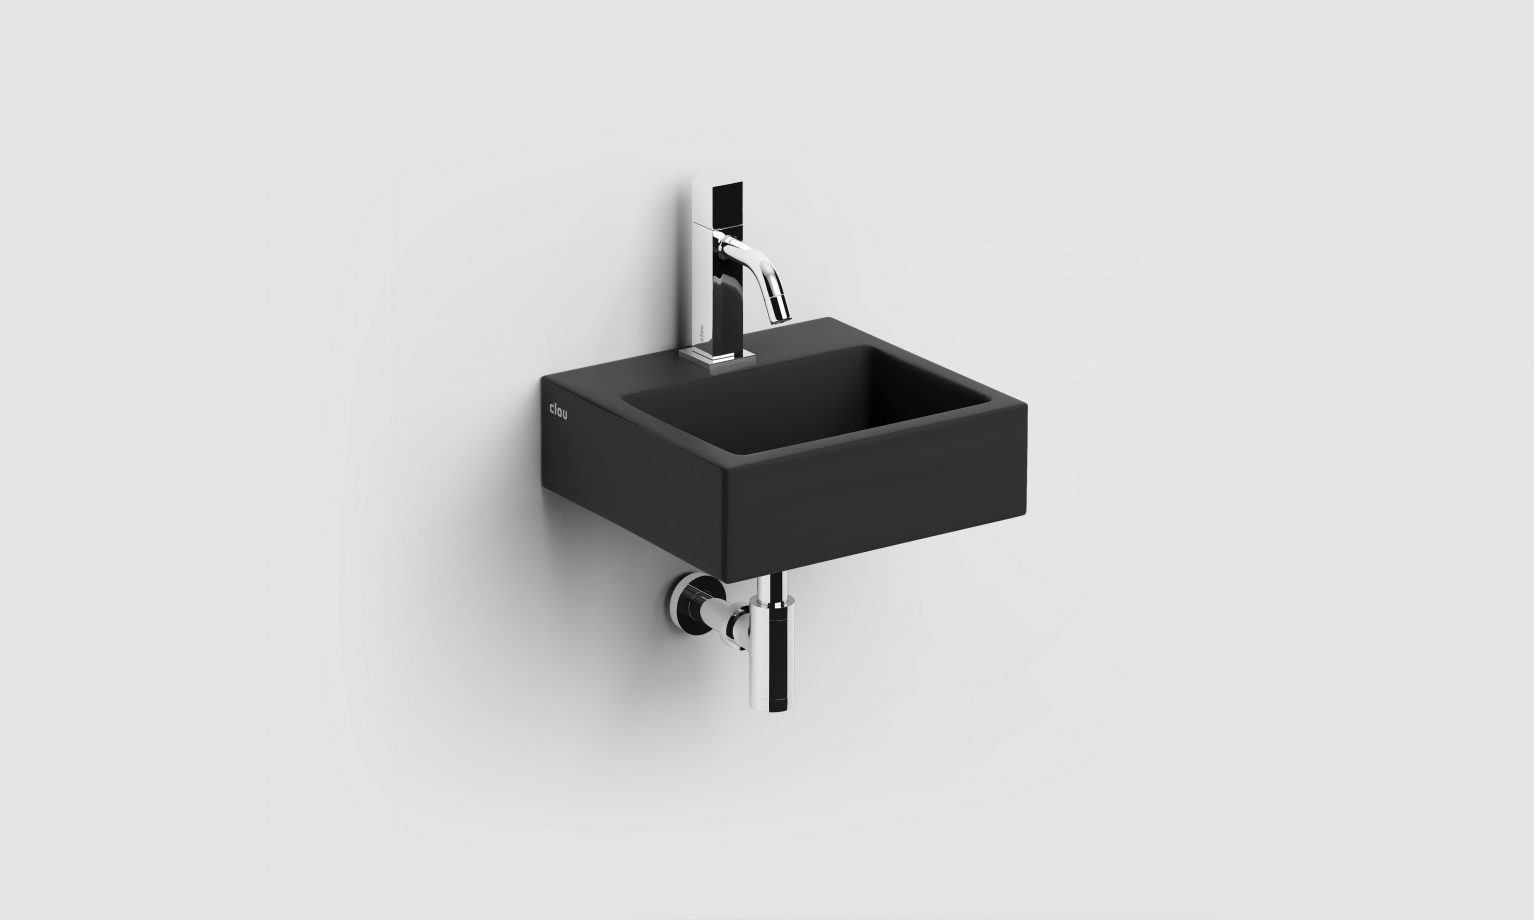 fontein-wastafel-wit-zwart-toilet-badkamer-luxe-sanitair-Flush-1-clou-composiet-voorbewerkt-kraangat-28cm-mineral-marmer-keramiek